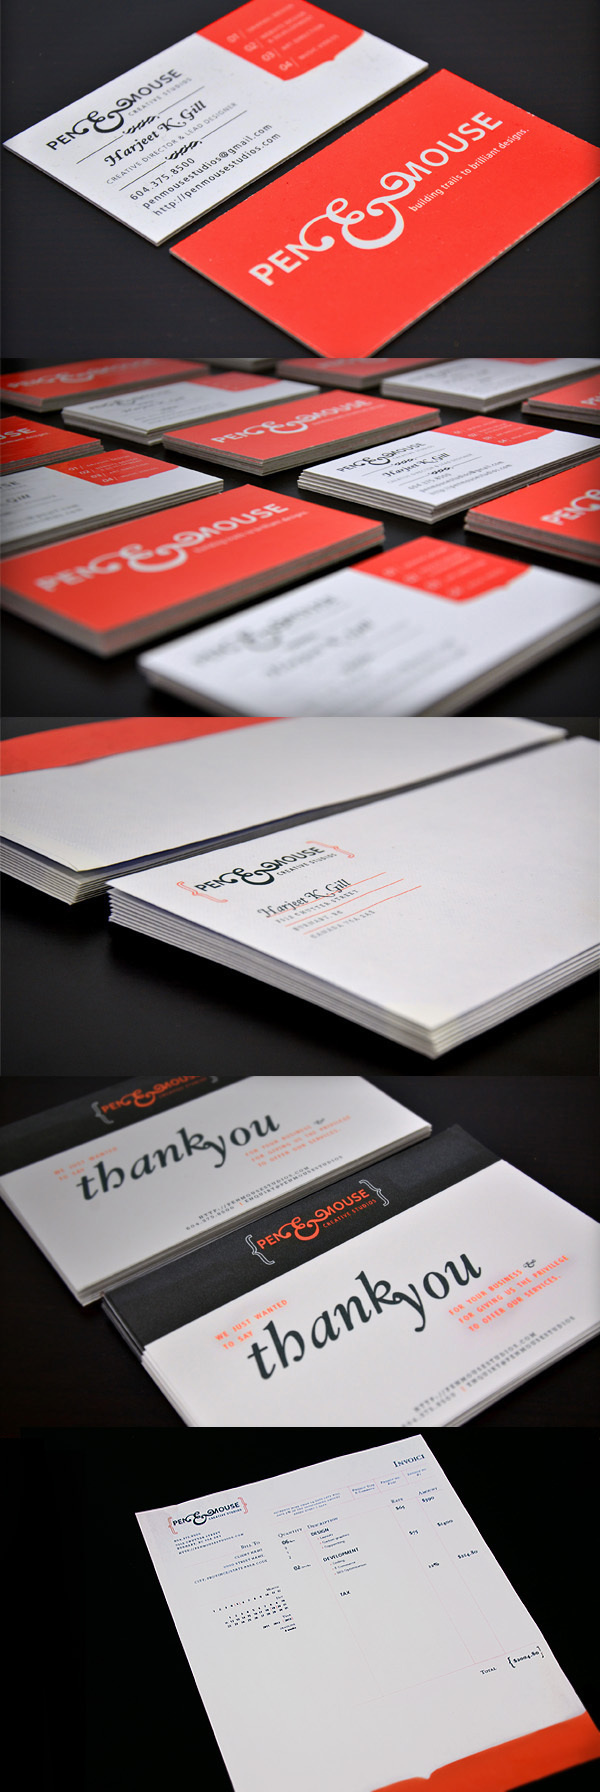 Invoice design idea #95: Pen&Mouse - Personal Branding #envelopes #invoice #business #stationary #branding #you #card #tha...